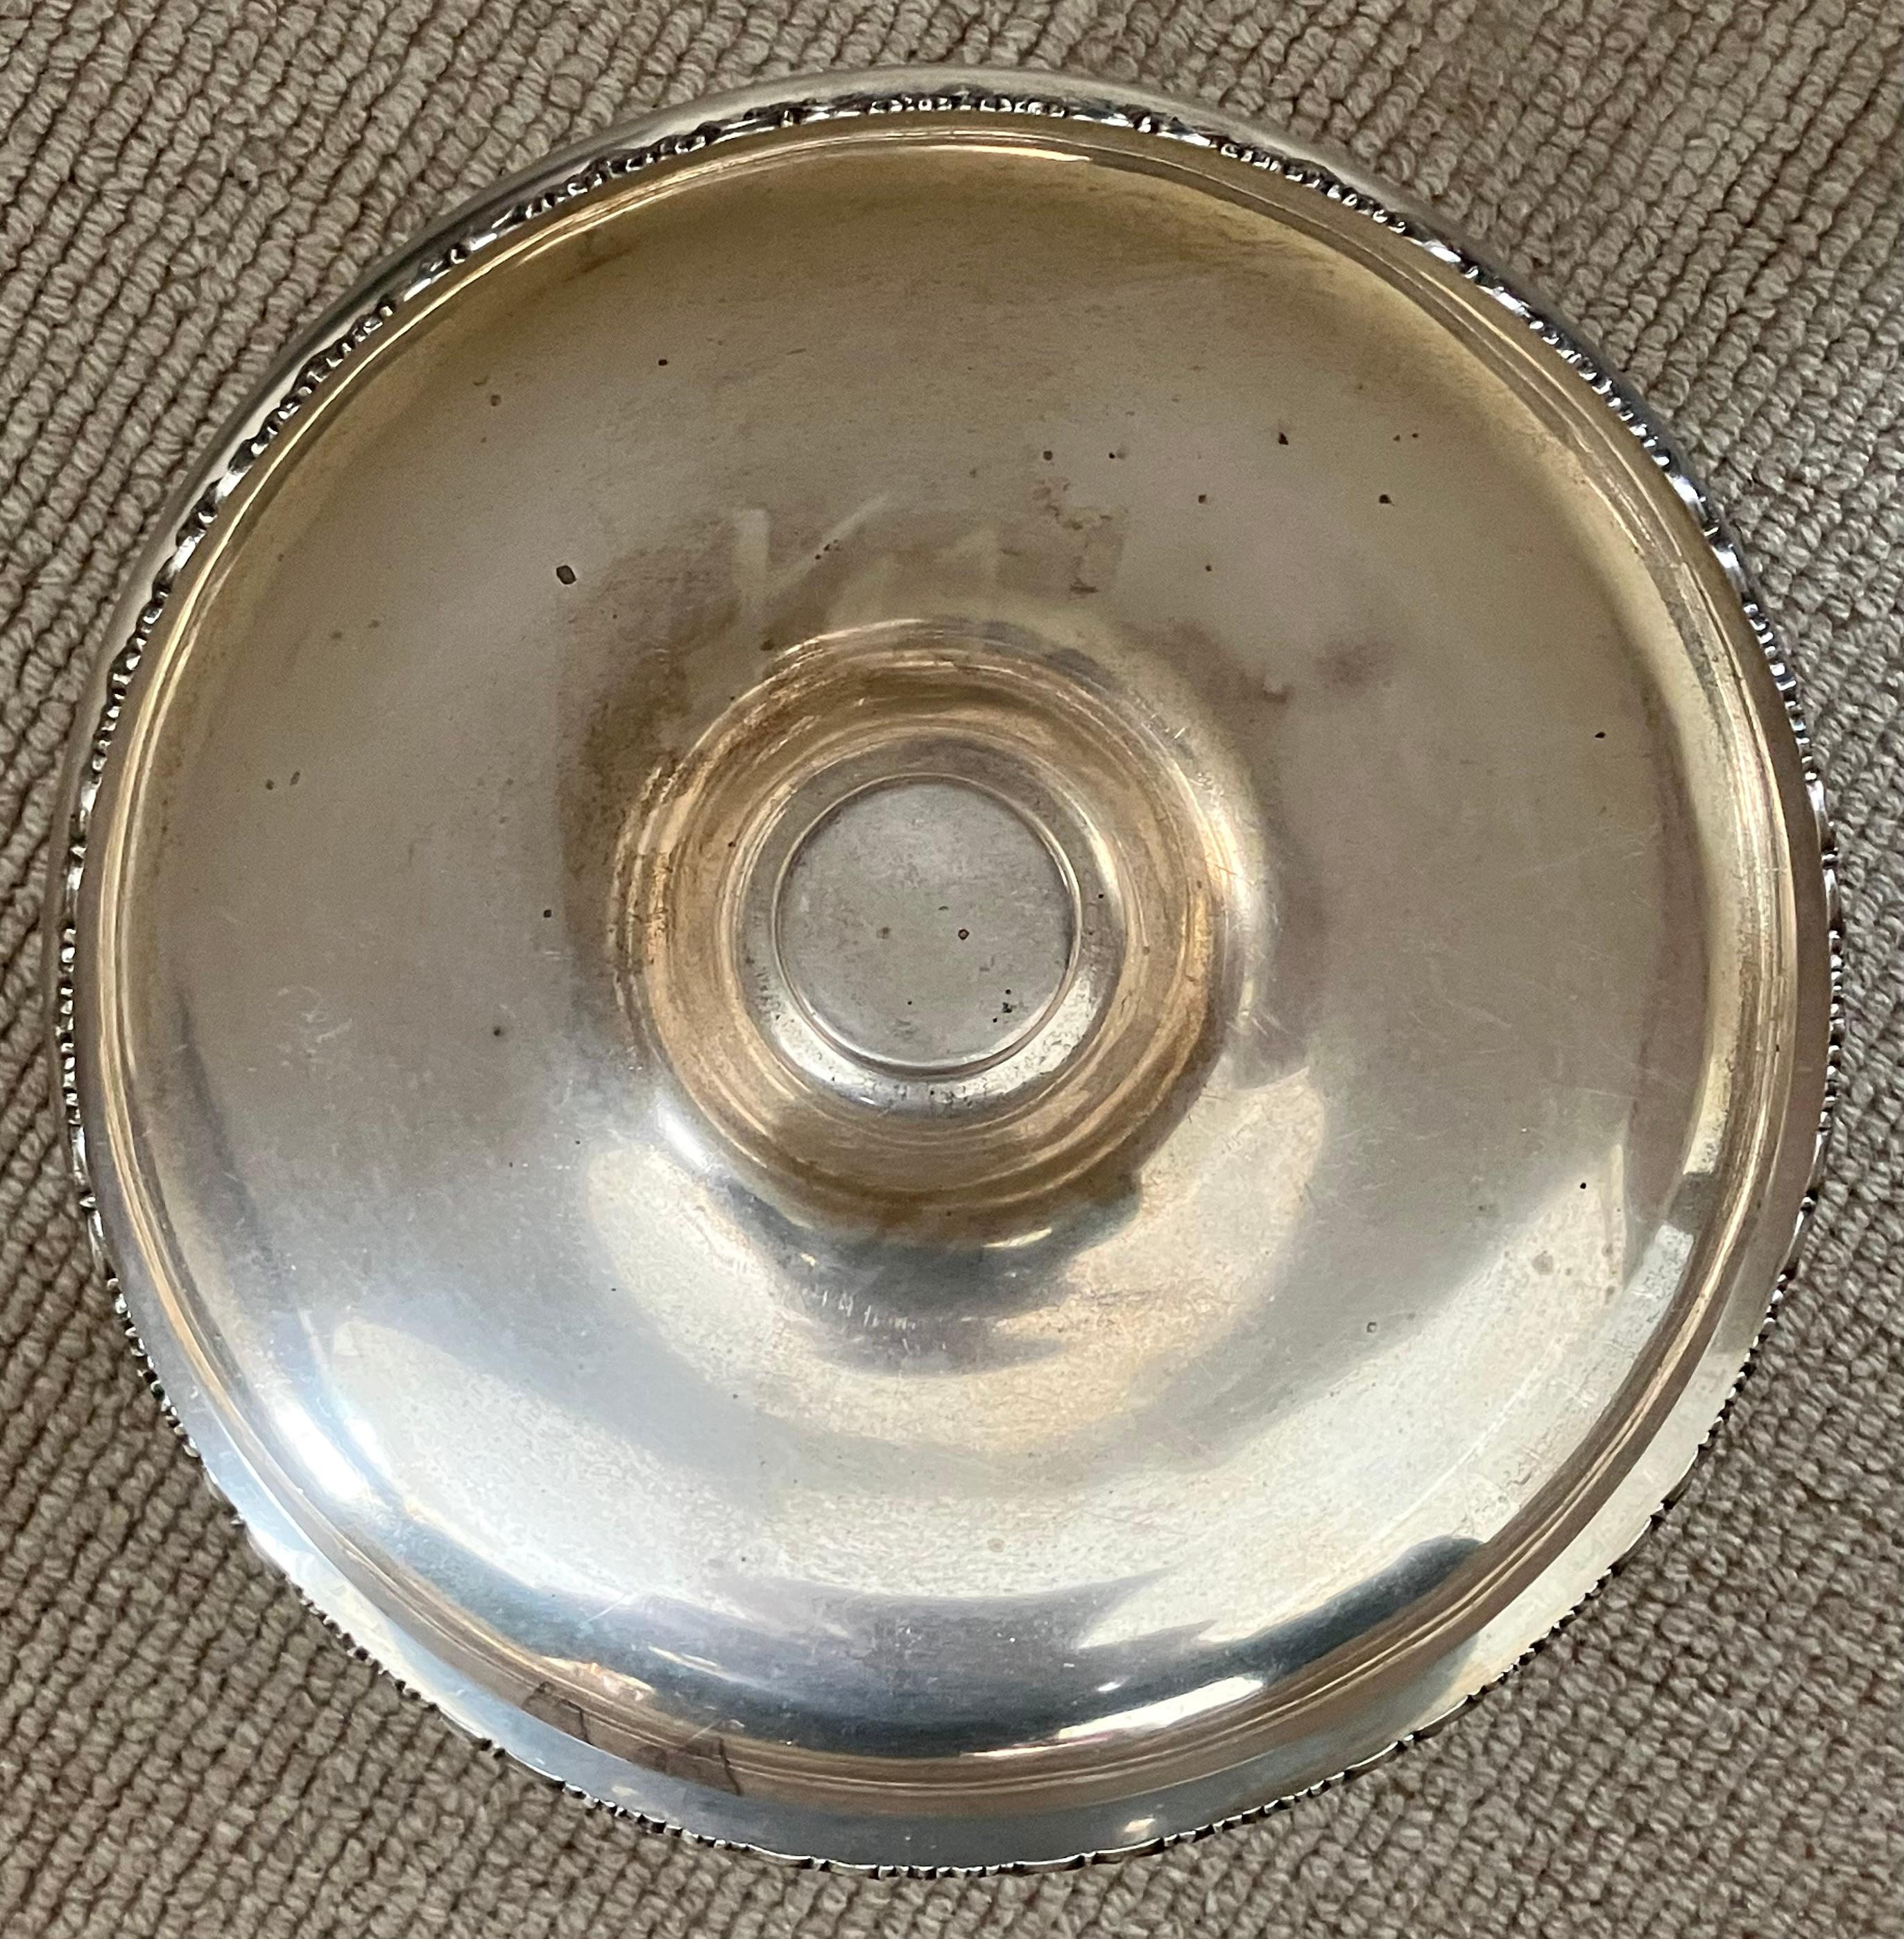  Tiffany Gilt-Washed Sterling Silver Center Bowl Circa 1873-1891 1